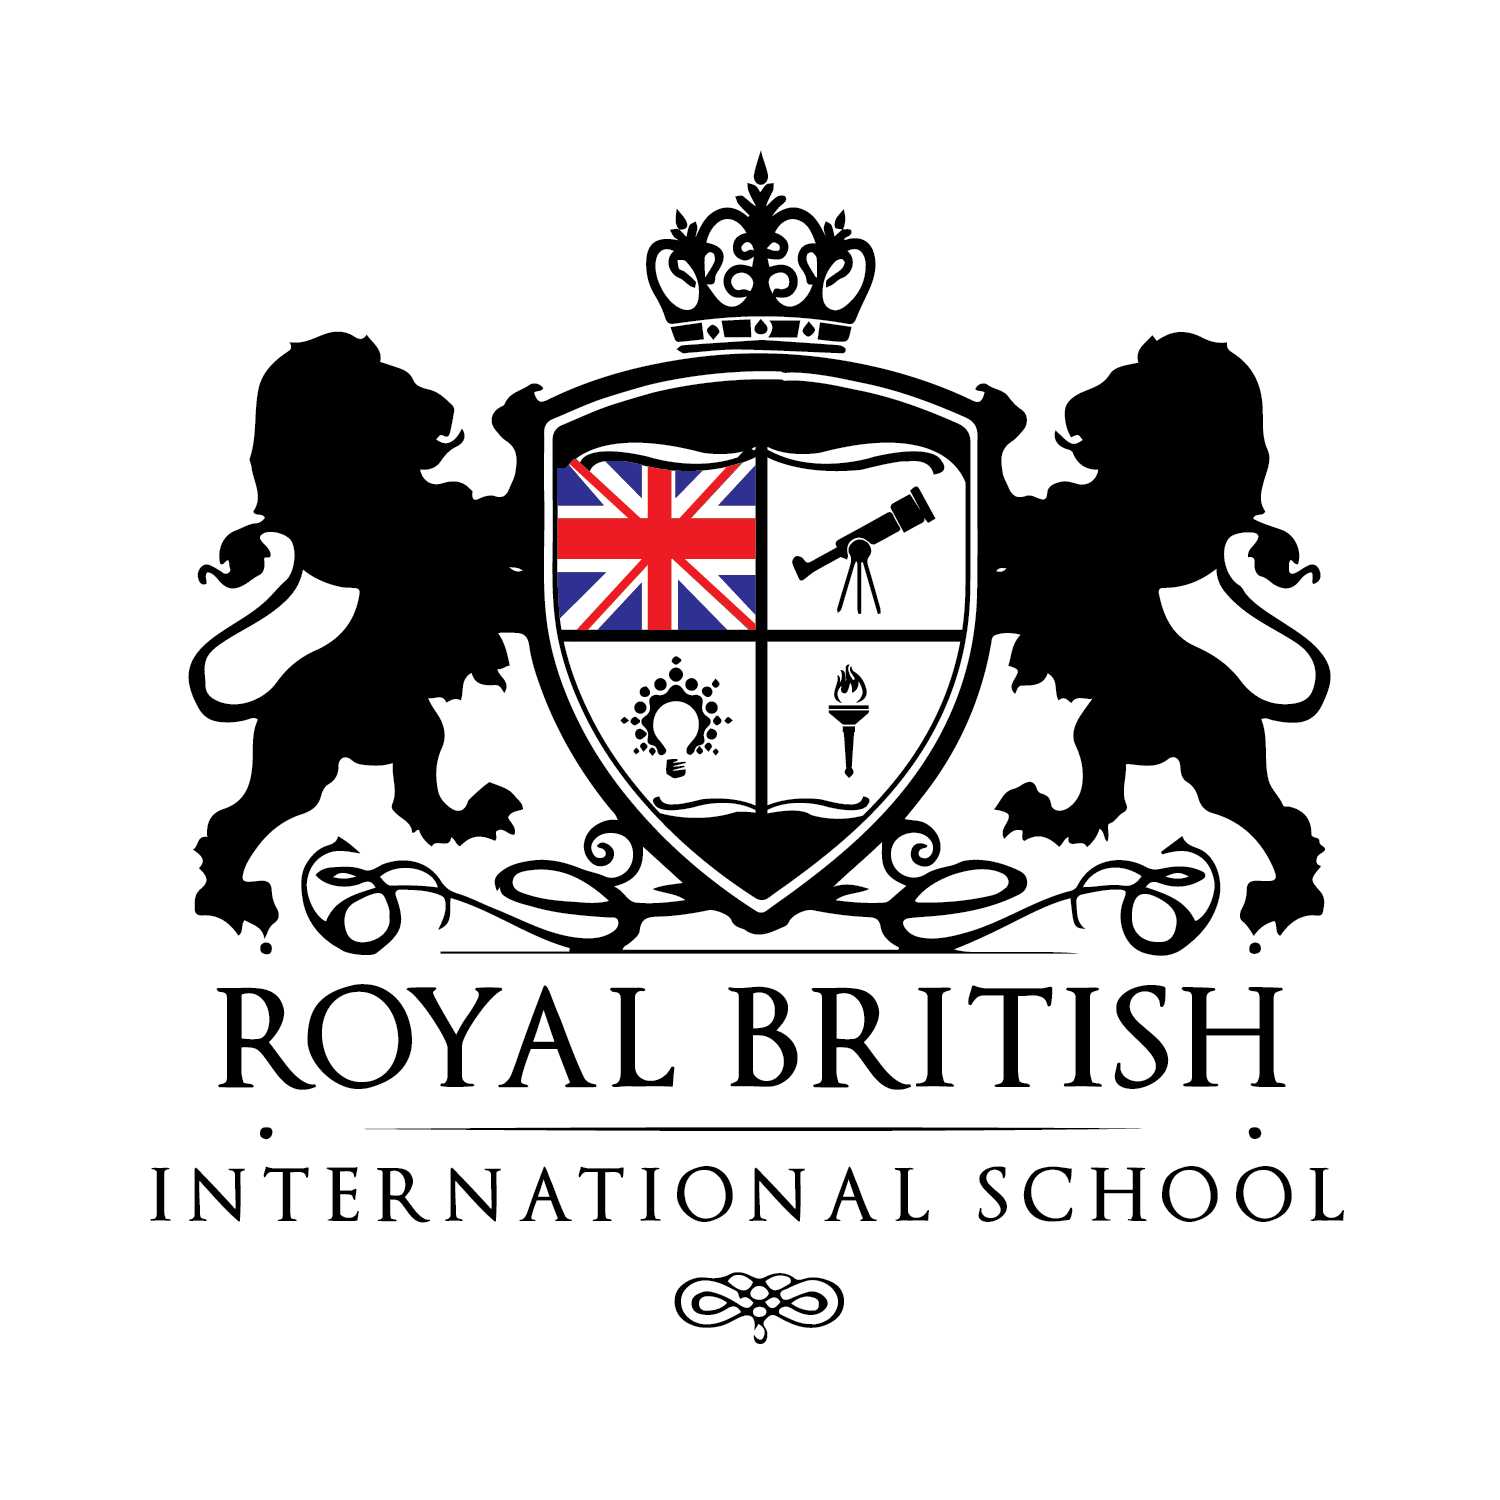 Royal British International